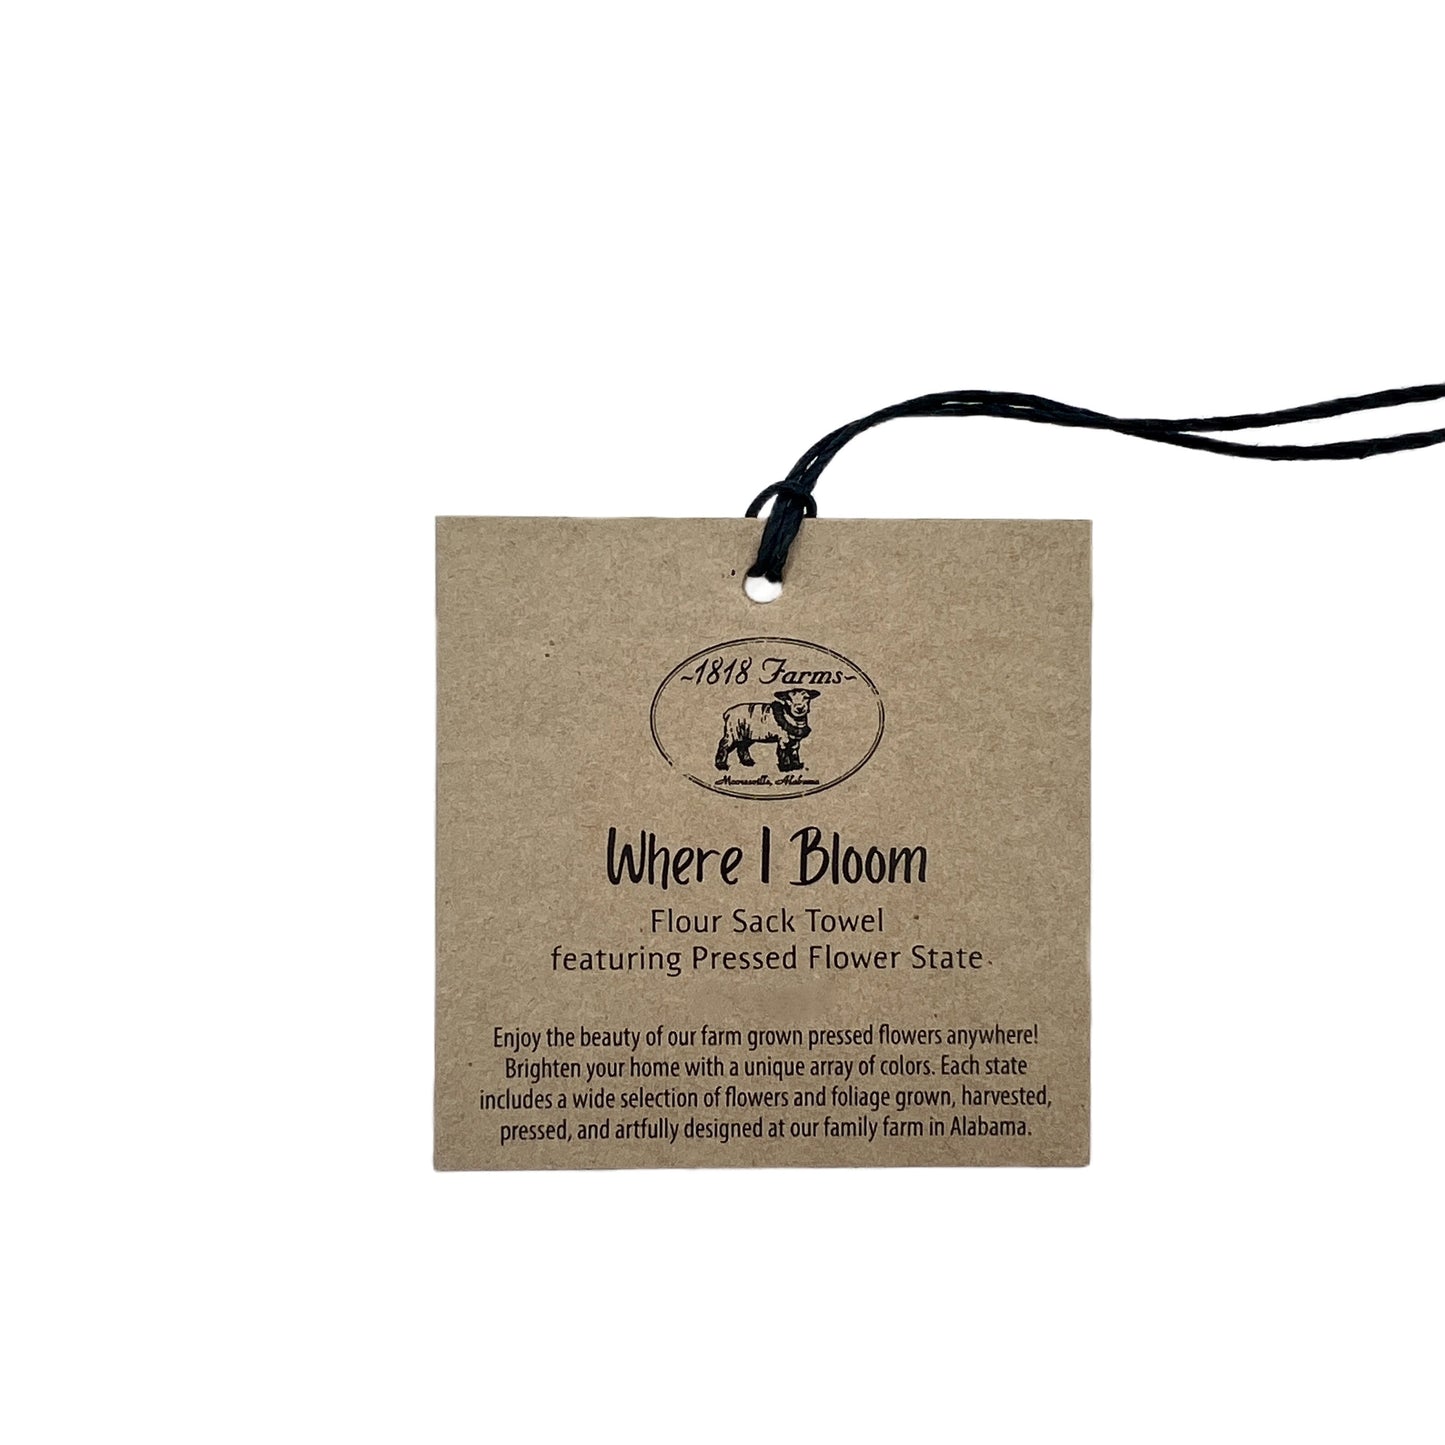 Louisiana Themed Flour Sack Towel  - "Where I Bloom" Collection Towel 1818 Farms   